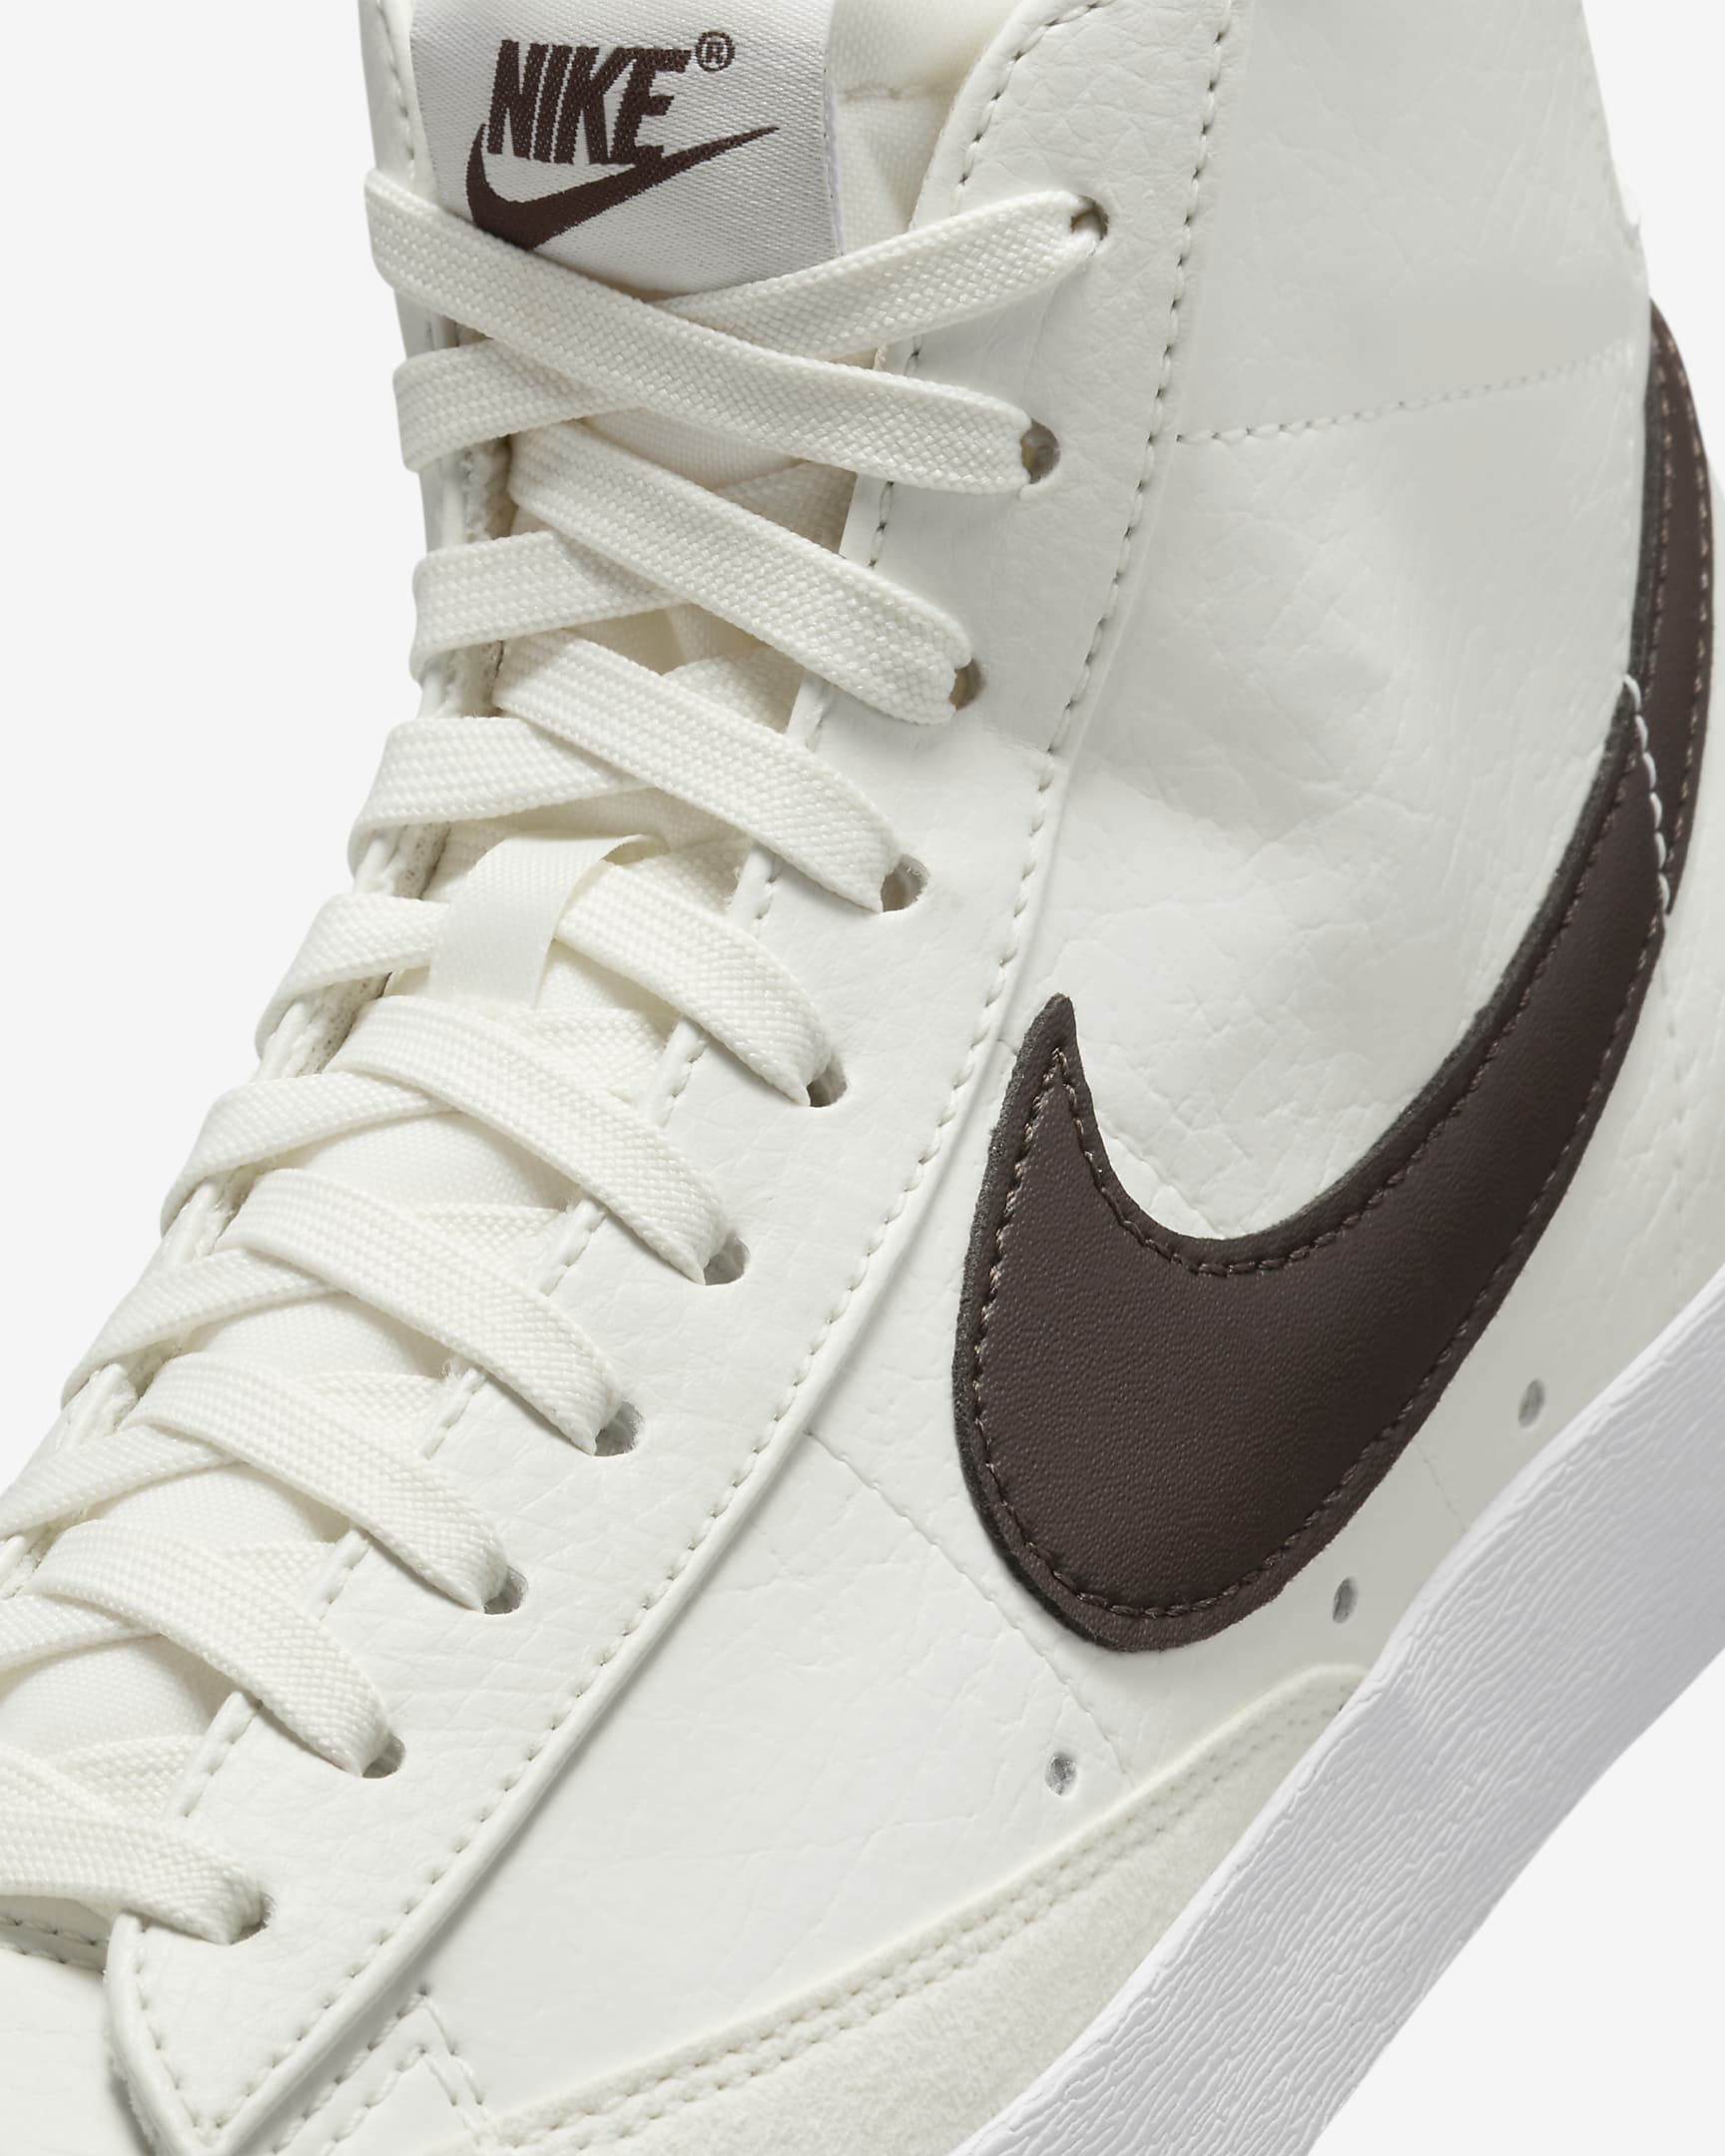 Nike Blazer Mid '77 Women's Shoes - Sail/White/Baroque Brown